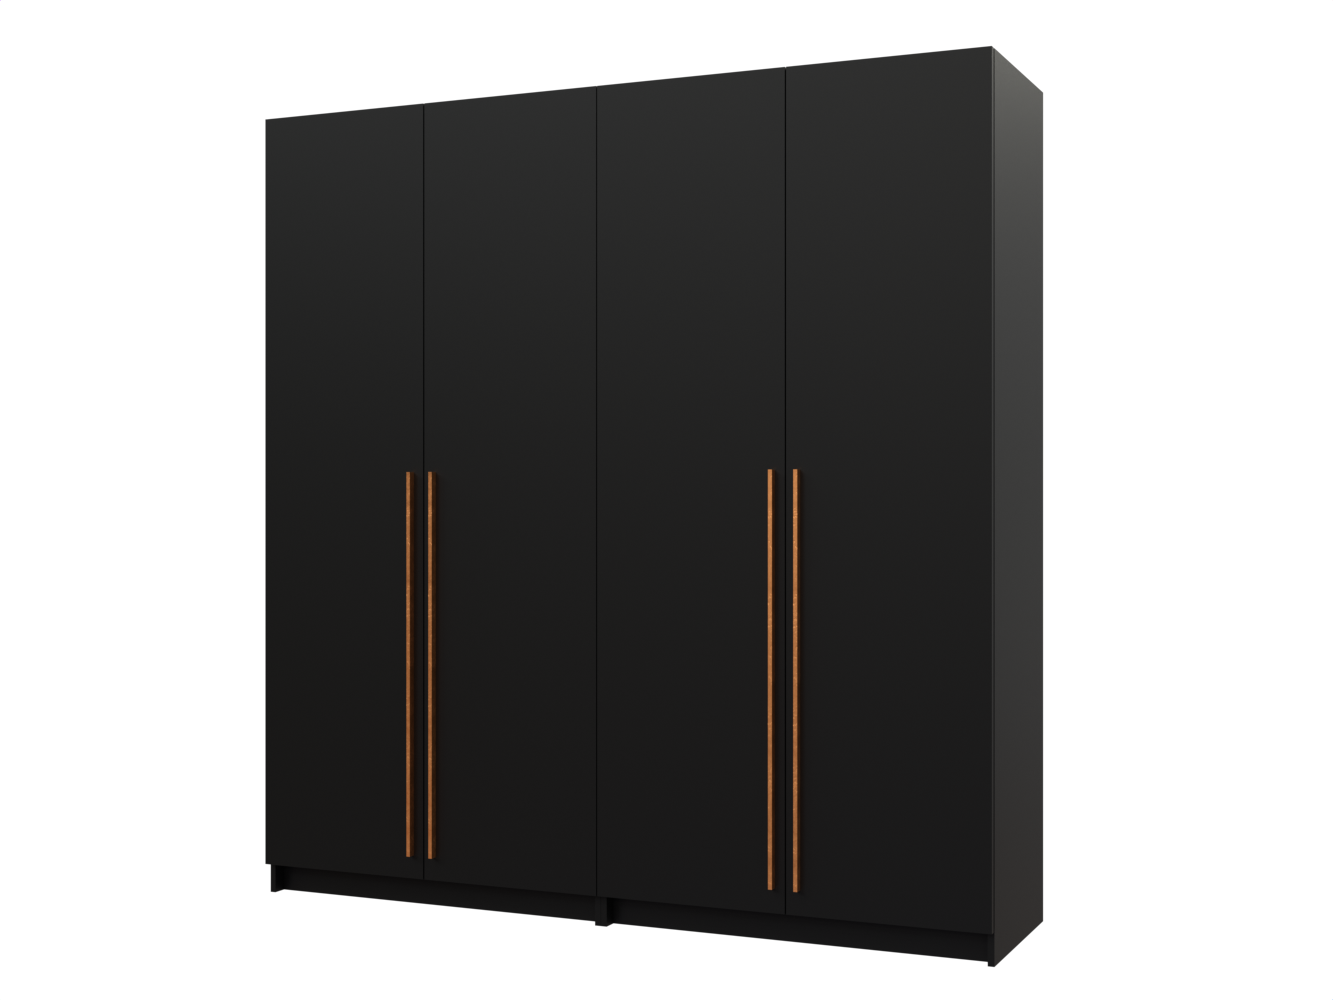 Распашной шкаф Пакс Фардал 68 black ИКЕА (IKEA) изображение товара